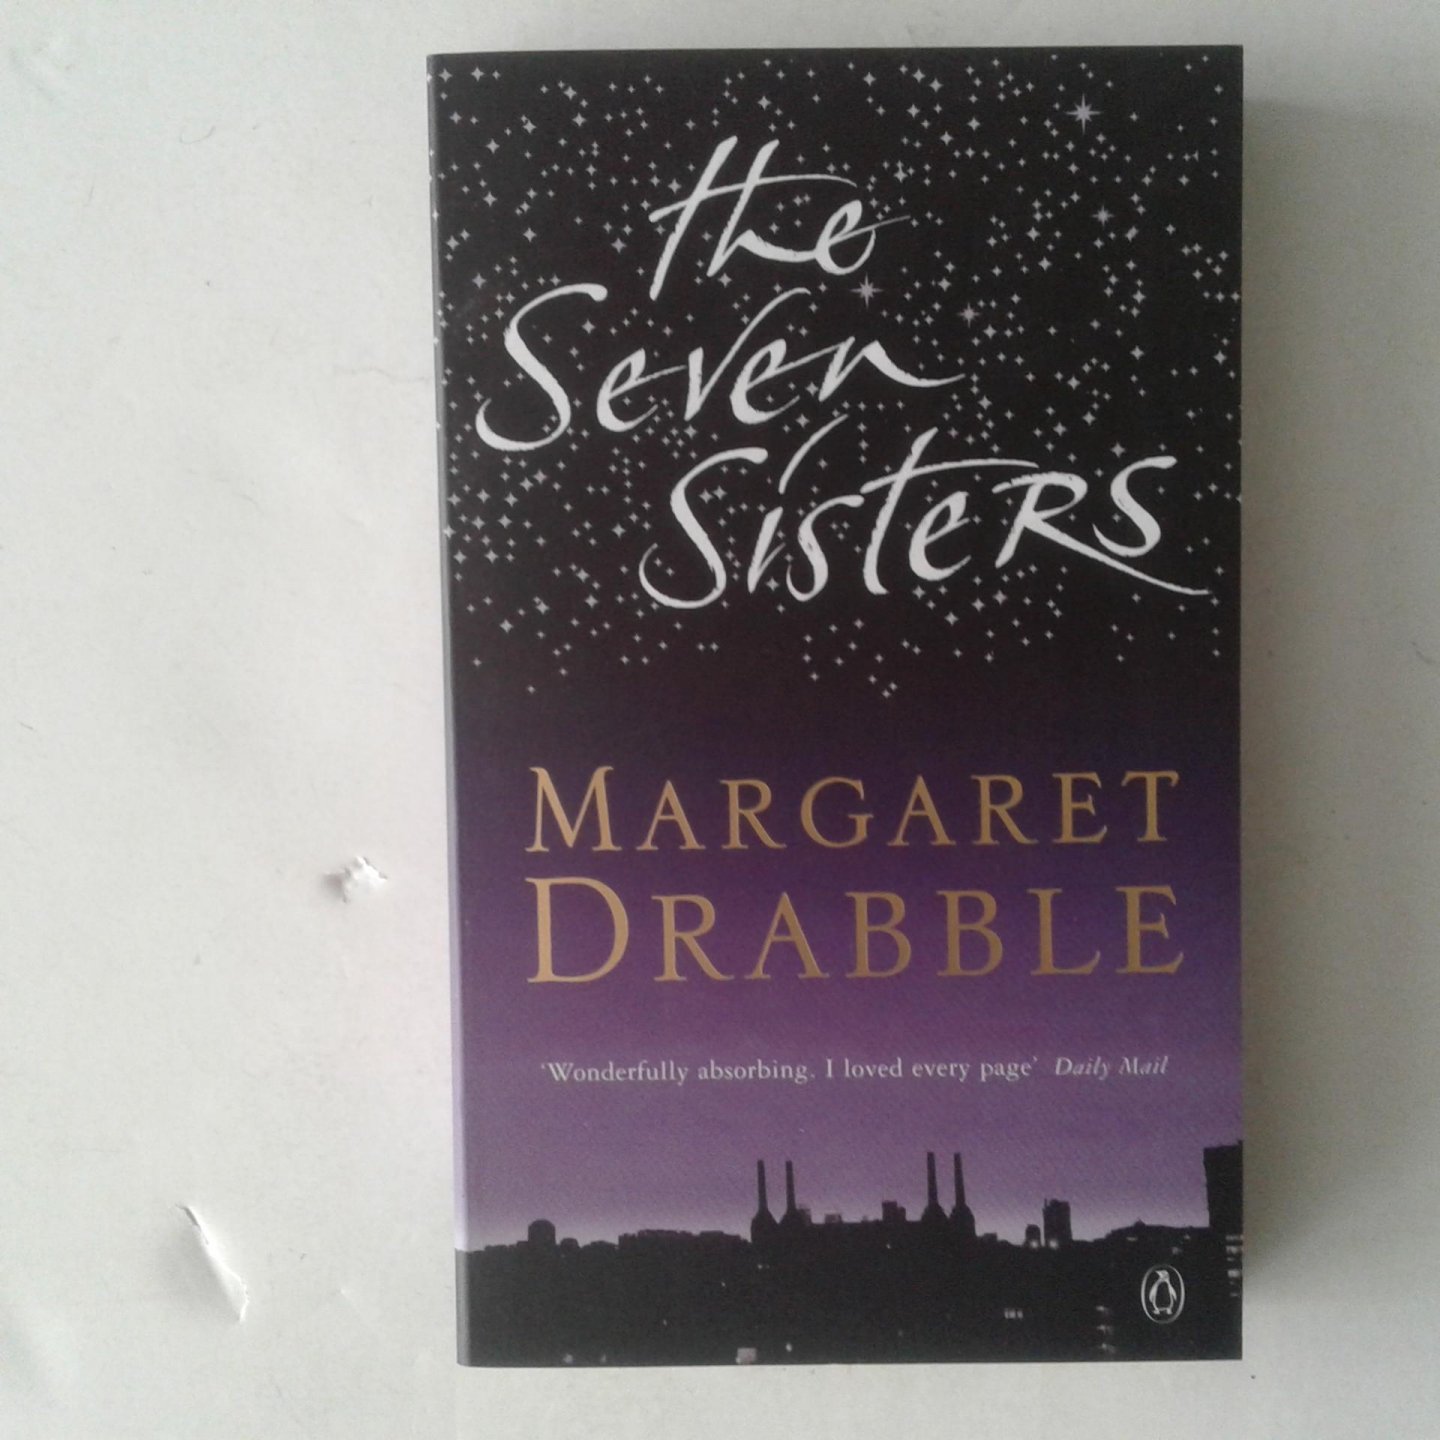 Drabble, Margaret - The Seven Sisters